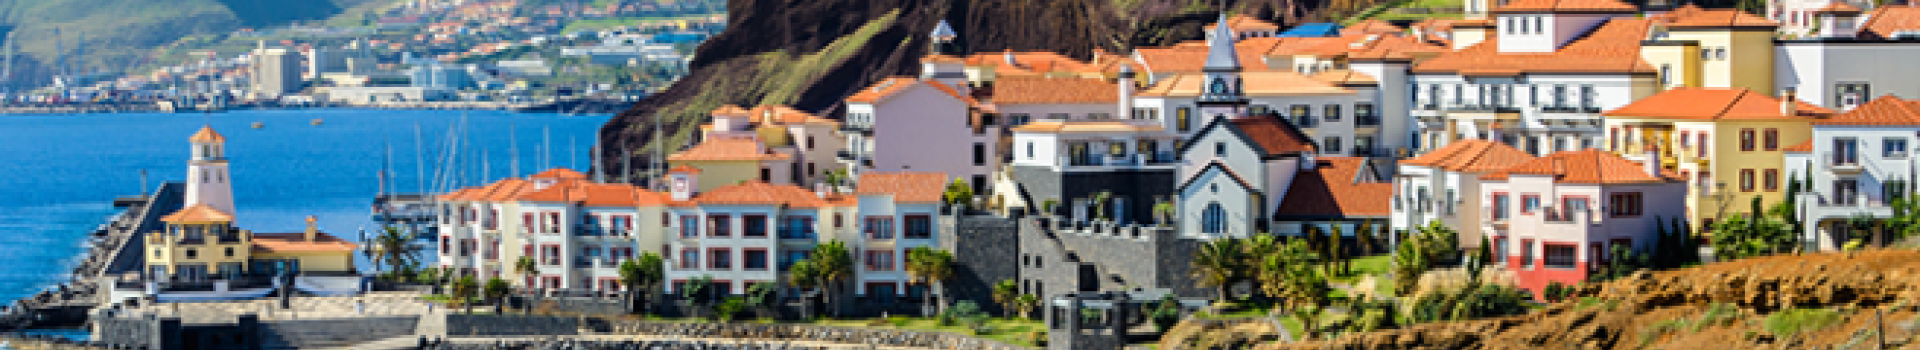 Holidays to Madeira | Book Flights & Hotel | Cassidy Travel